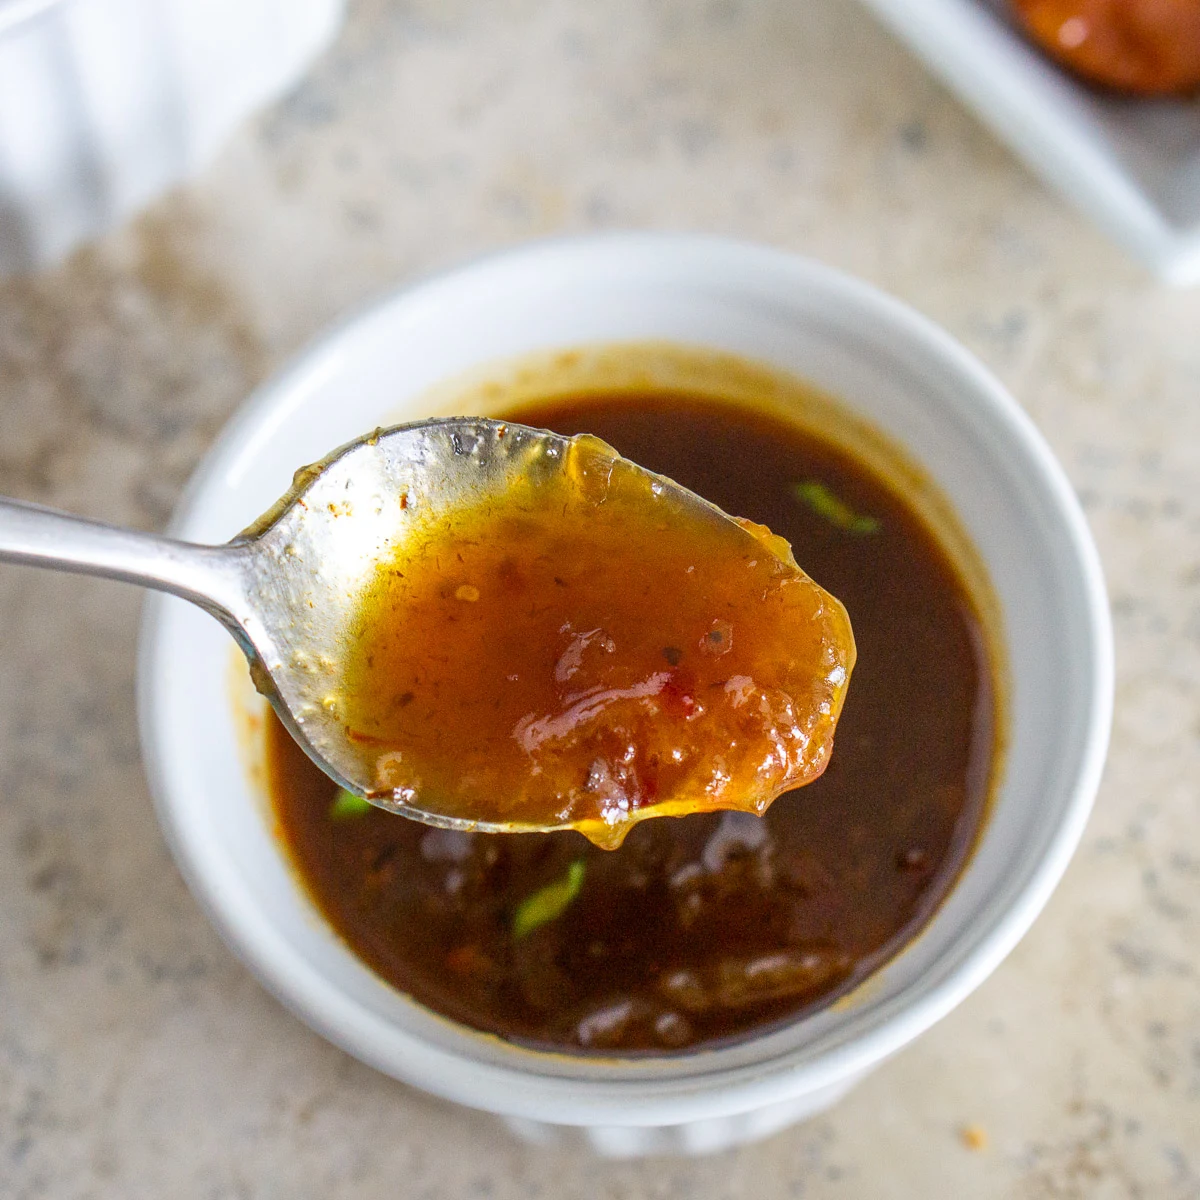 chili peach sauce for kielbasa bites